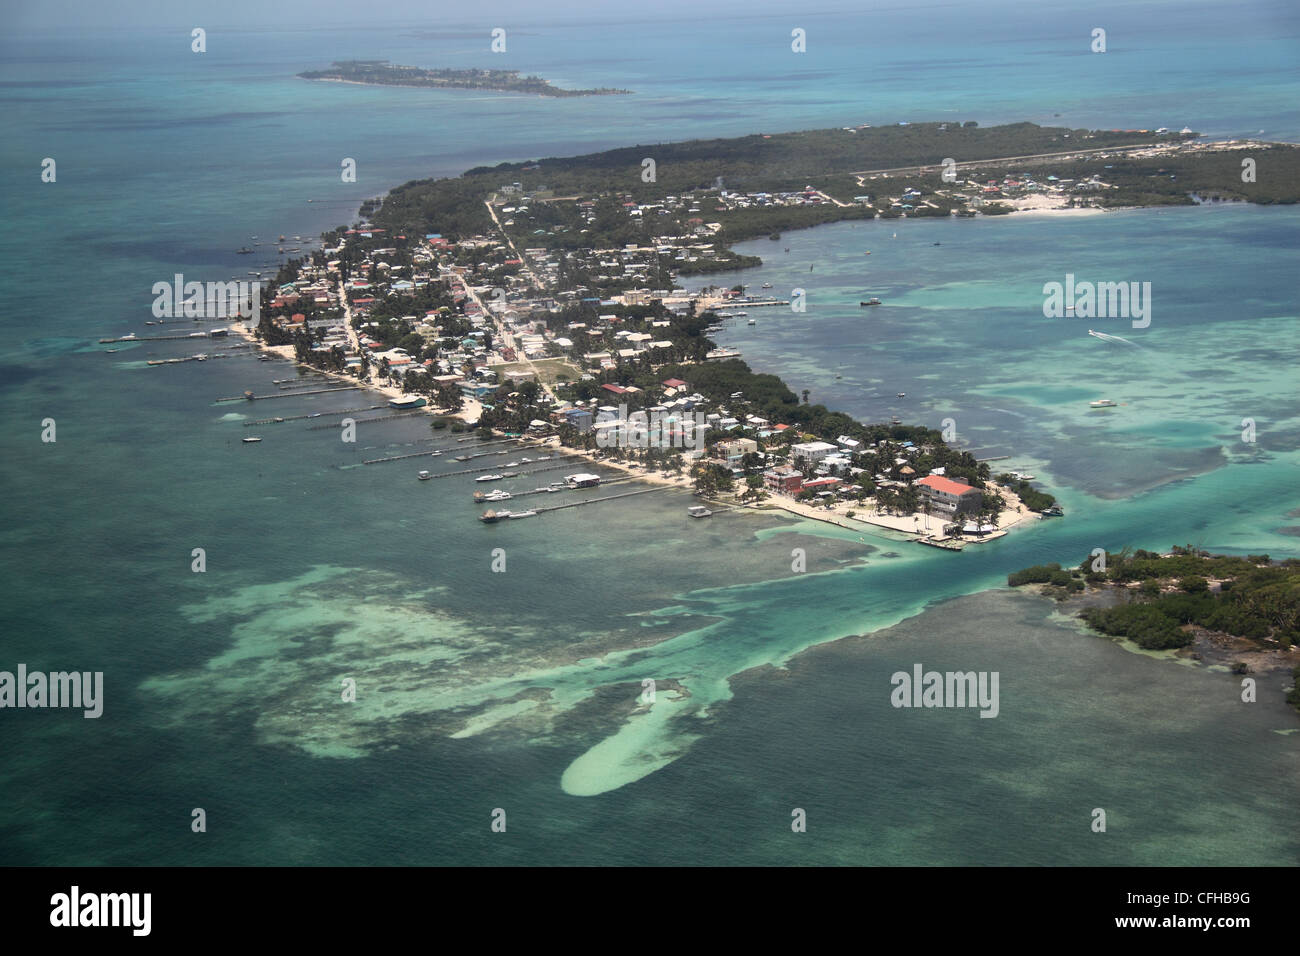 Caye Caulker, Belize Barrier Reef, Belize, Caribbean, Central America Stock Photo